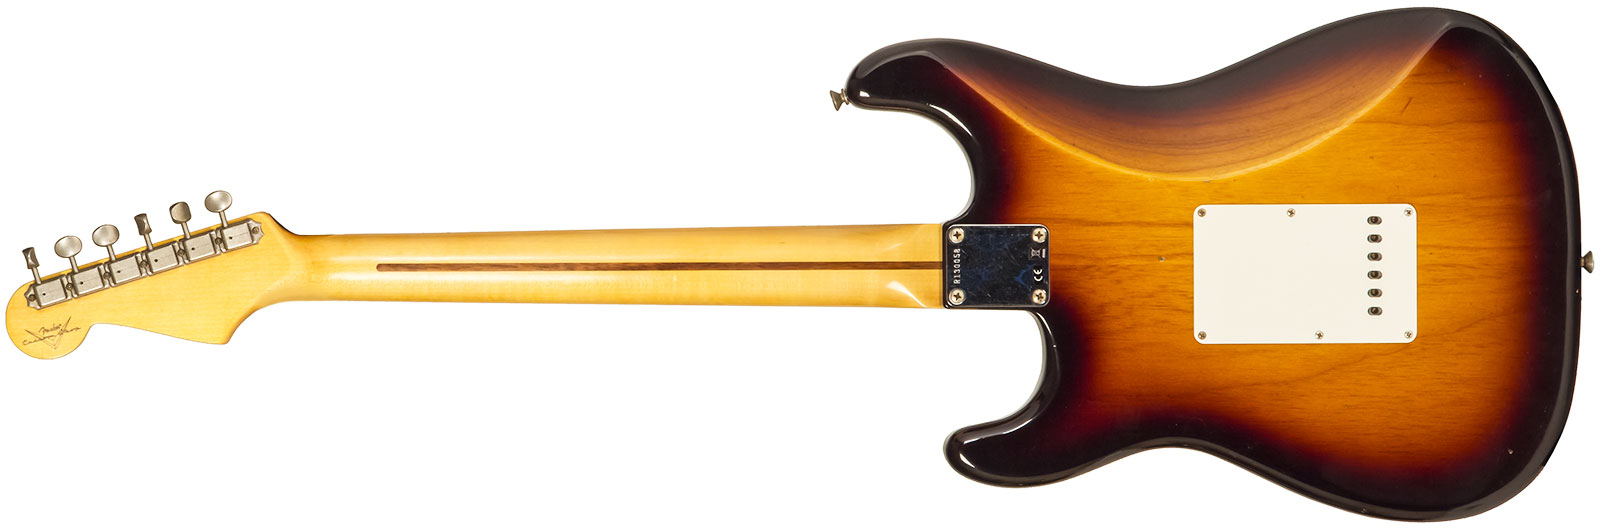 Fender Custom Shop Strat 1955 3s Trem Mn #r130058 - Journeyman Relic 2-color Sunburst - Guitarra eléctrica con forma de str. - Variation 2